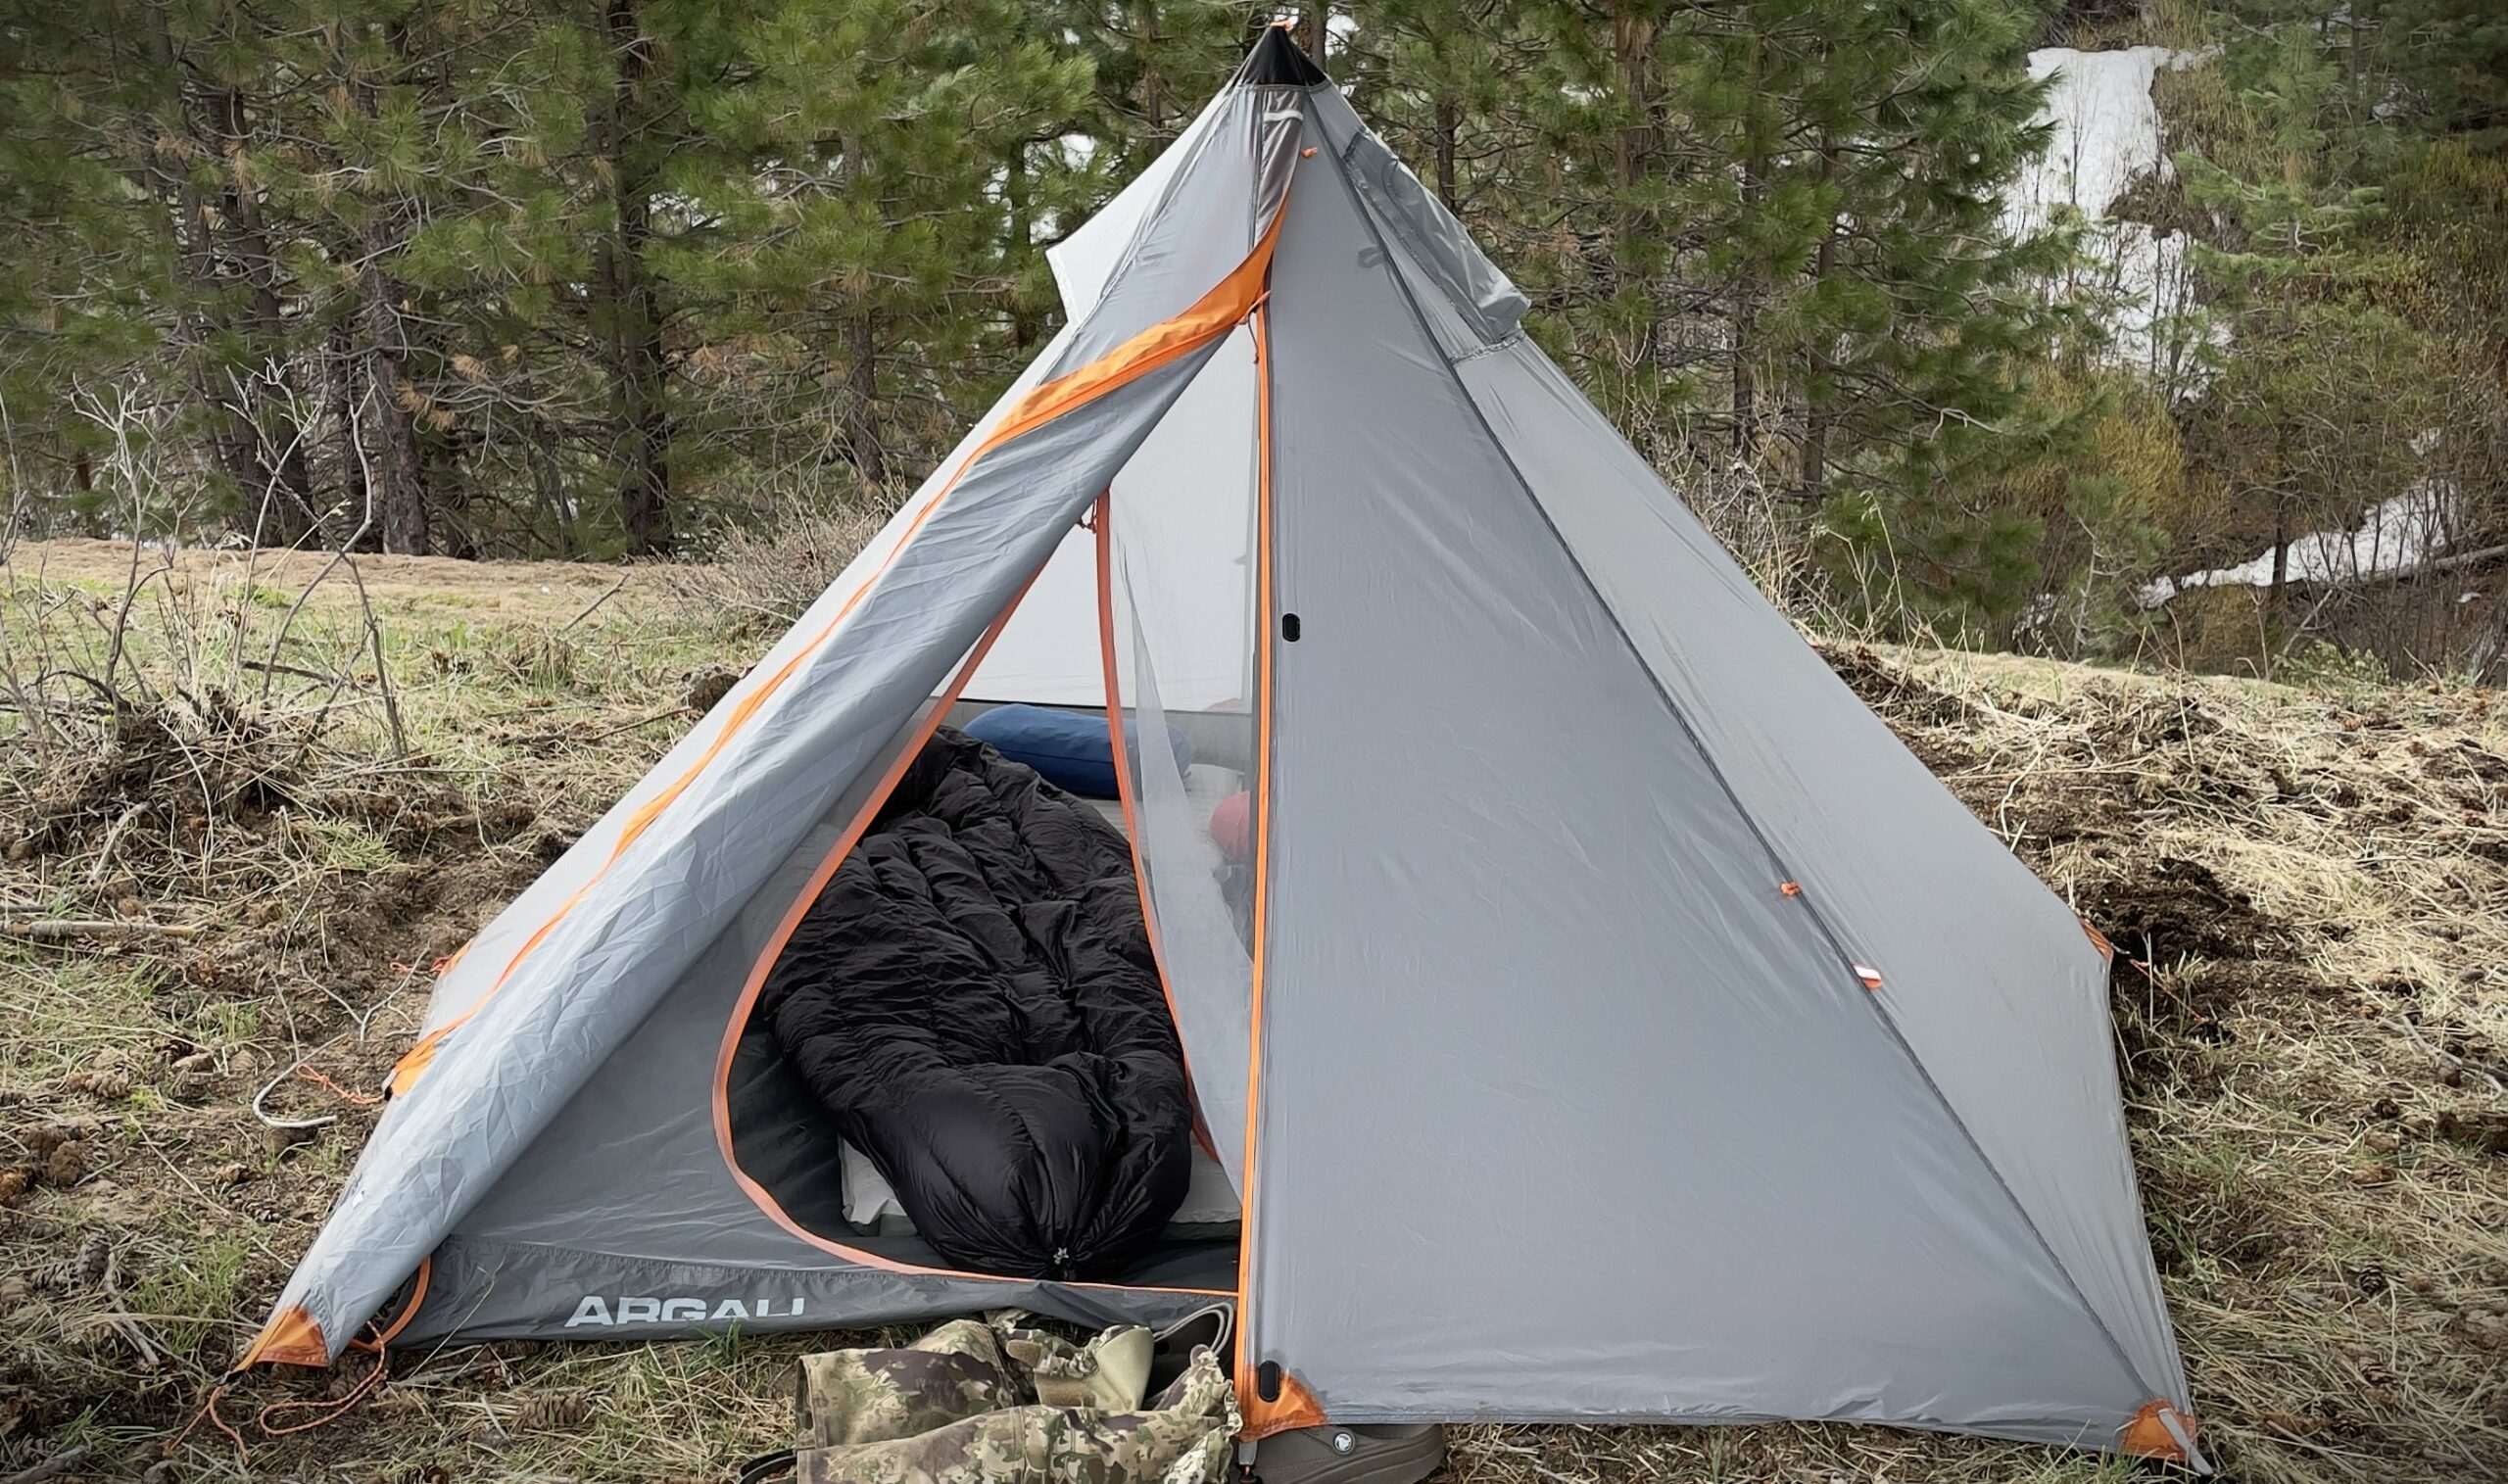 Argali Rincon 2p tent review. Ultralight hot tent